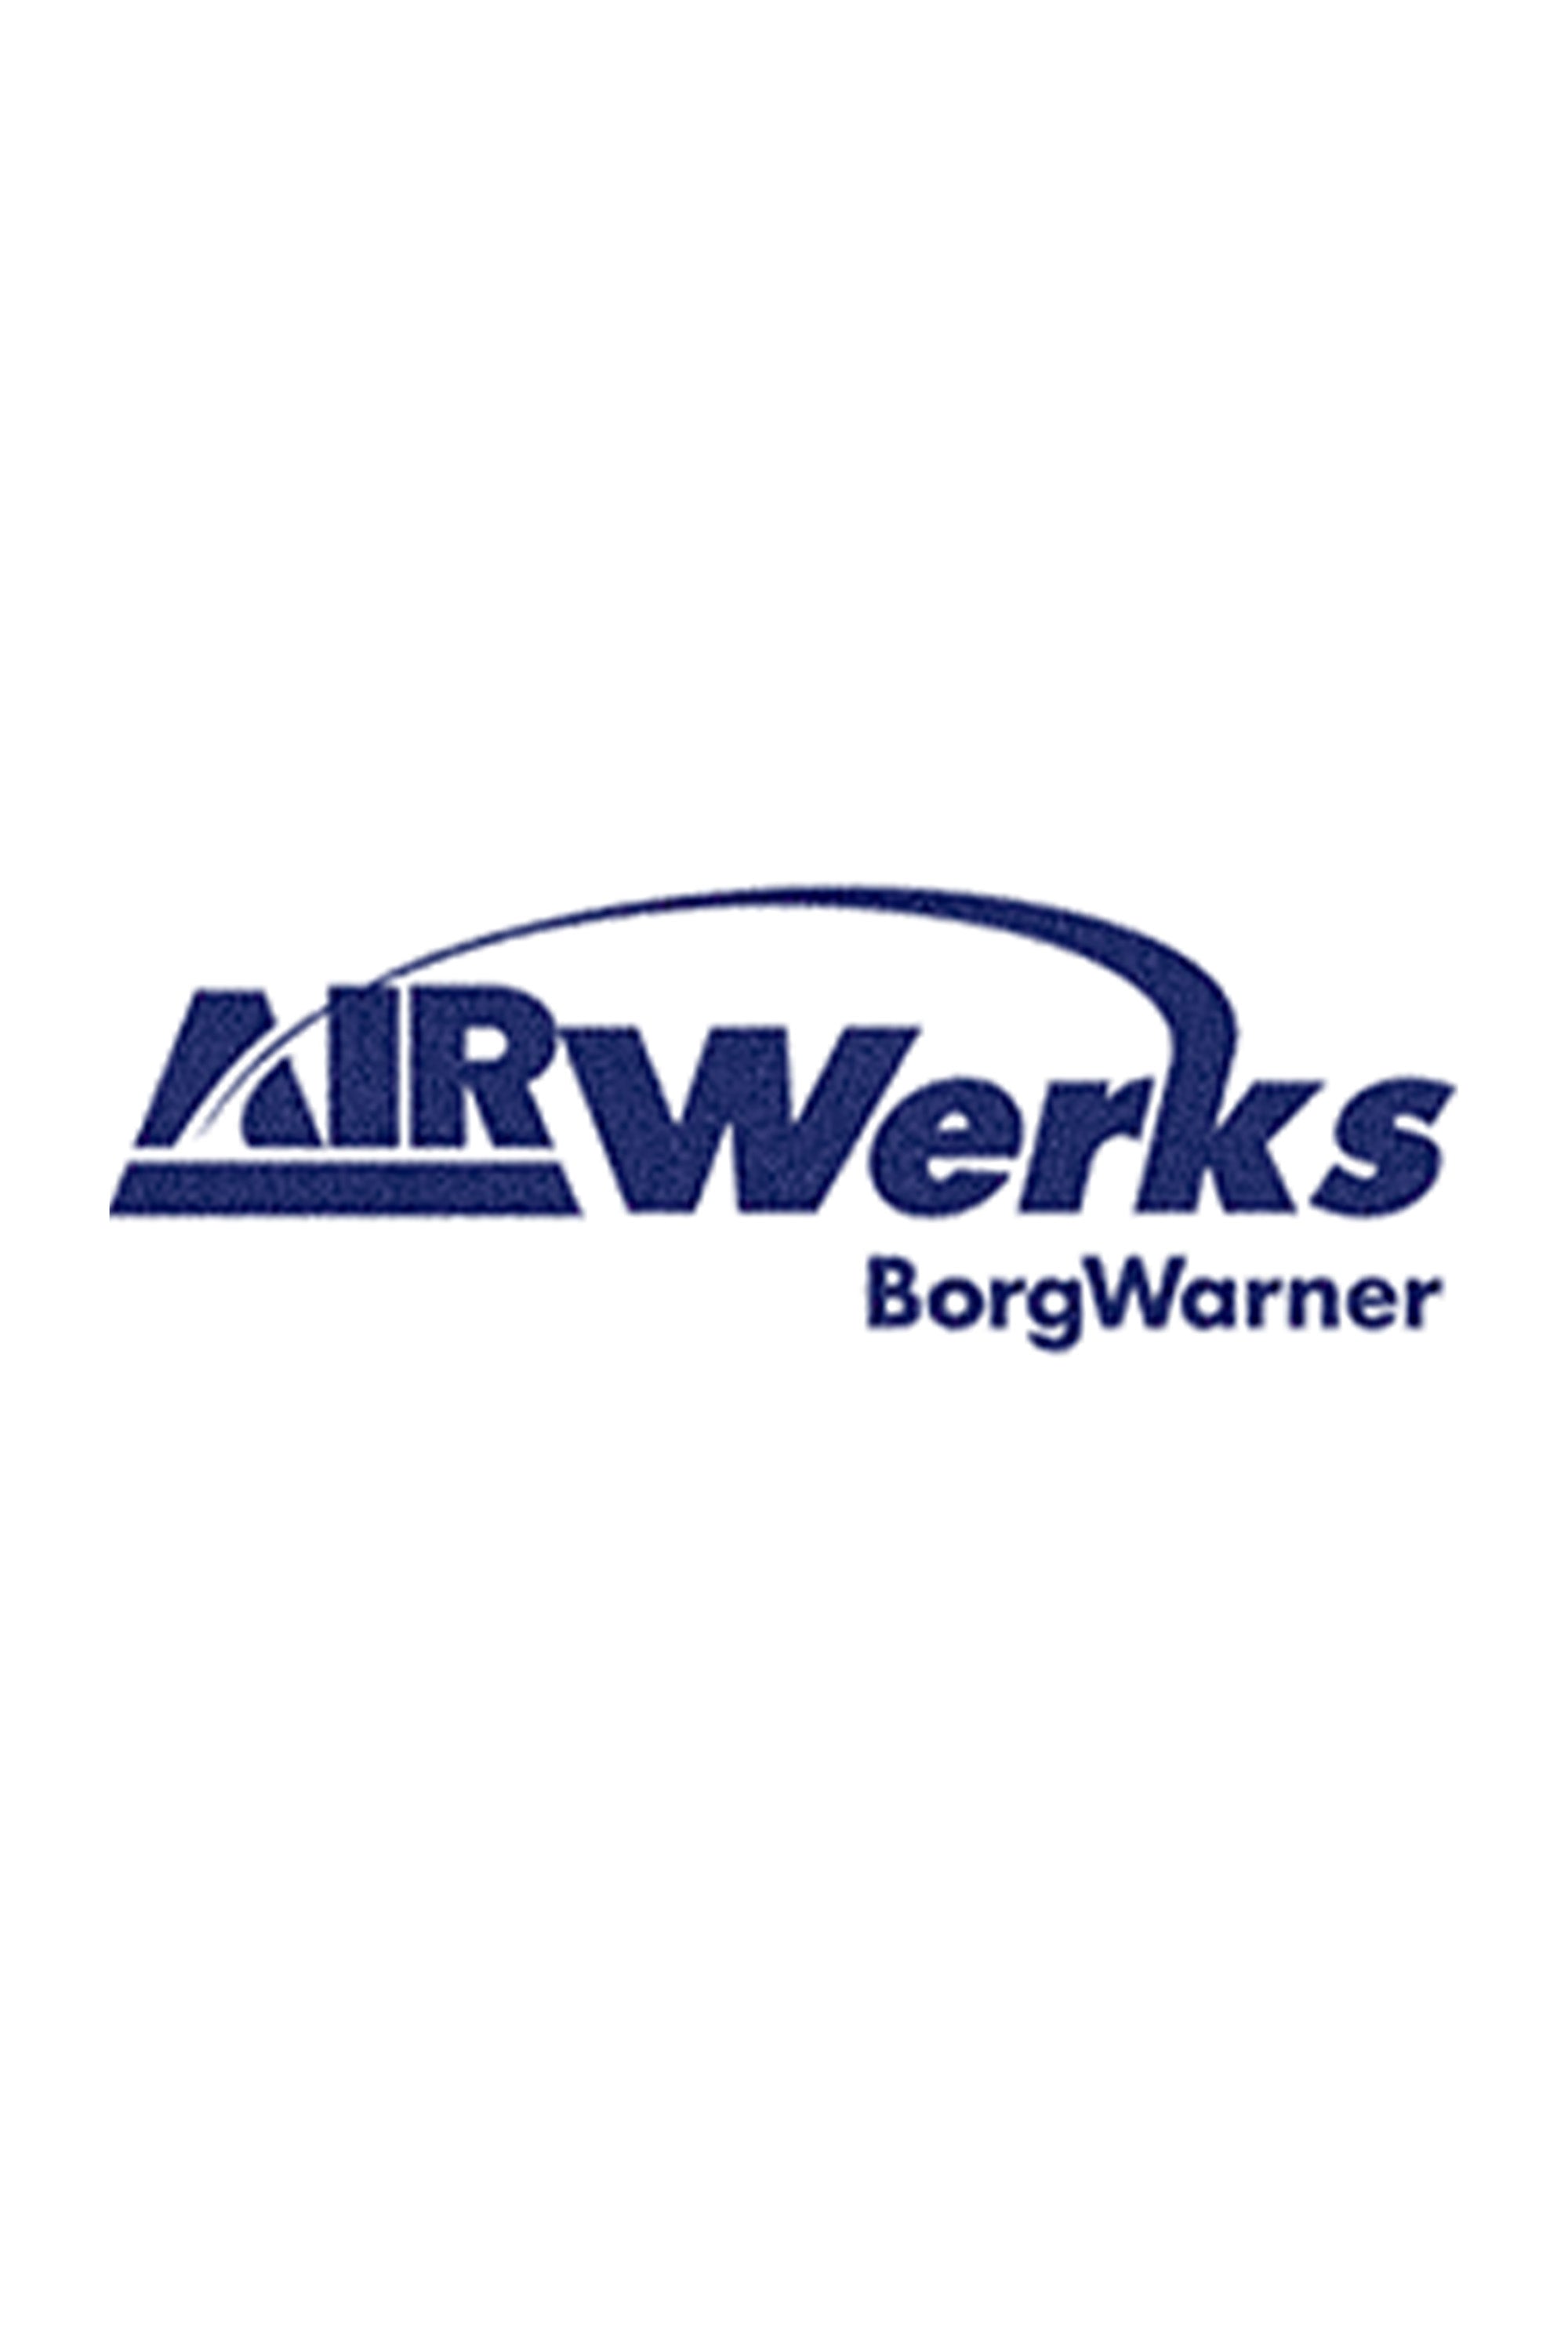 Borgwarner Airwerks